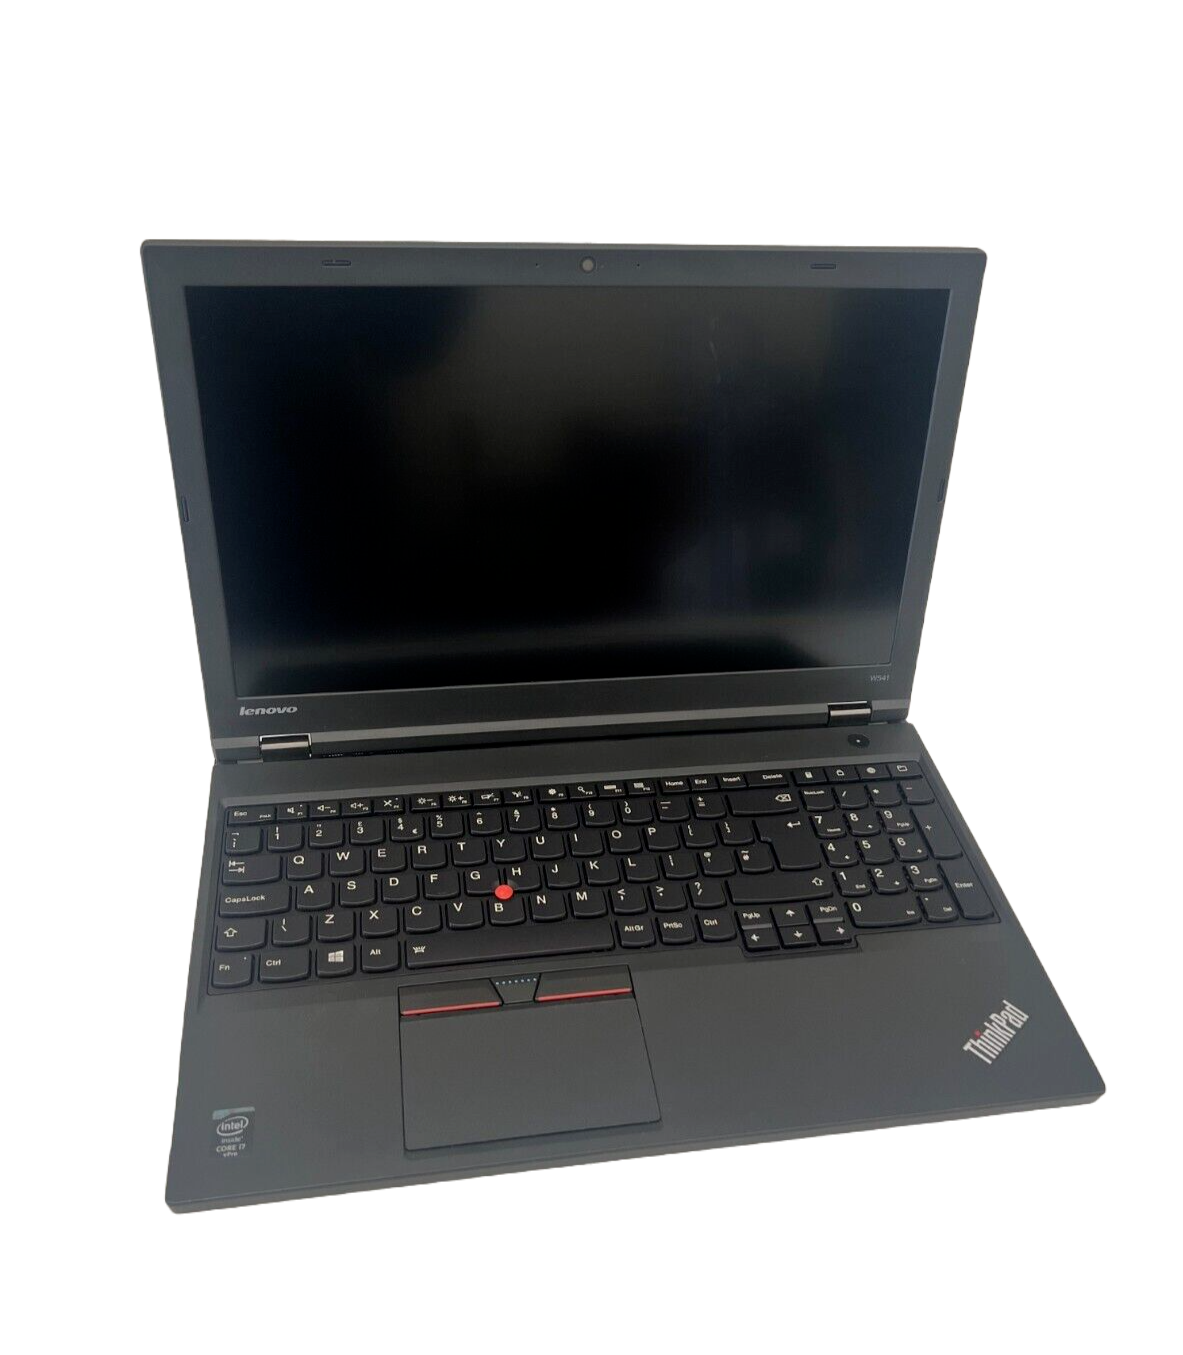 Lenovo Thinkpad W541 laptop core i7-4810MQ Turbo 3.8GHz 16GB 512GB SSD 15.6" QHD